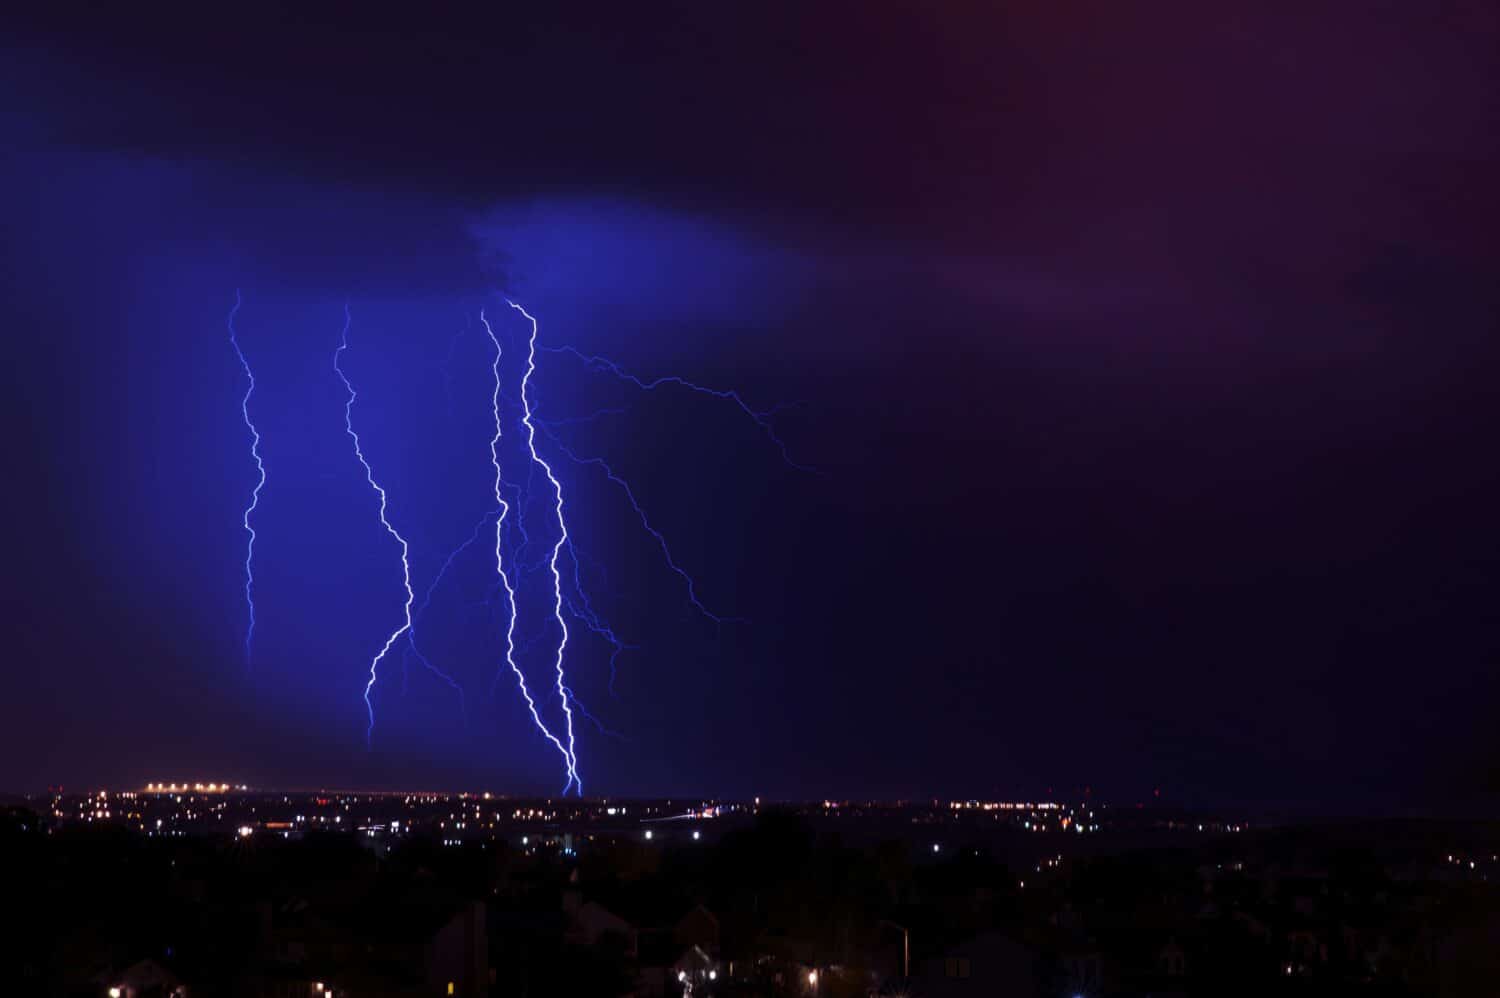 Overnight Lightning Storm. Storm Over City. Few Lightning Strikes. Stormy Overnight Weather in Colorado Springs Metro Area. Horizontal Photo.